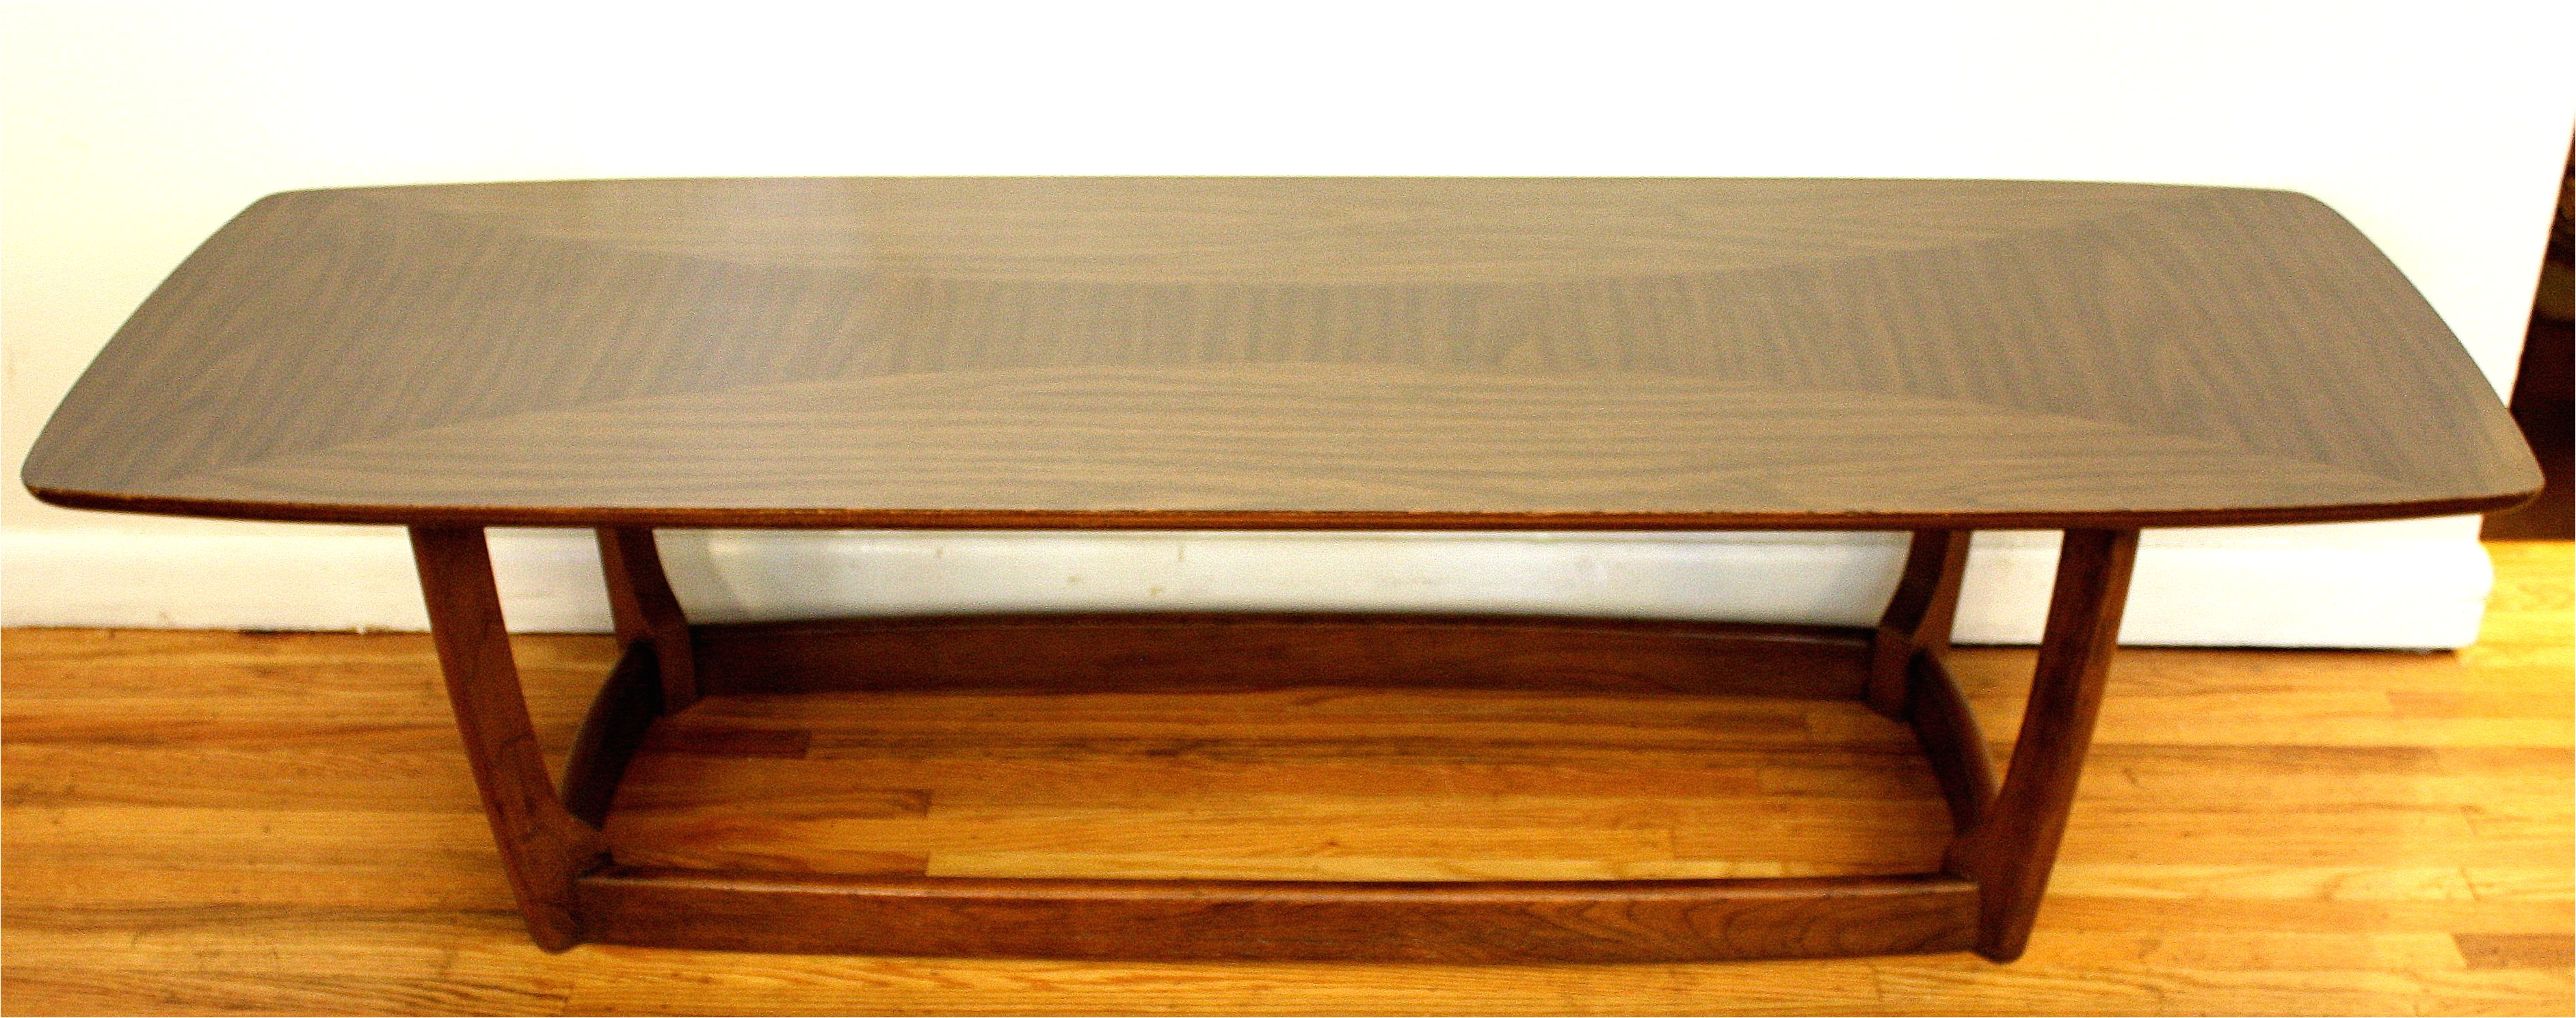 Mid Century Coffee Tables Mid Century Modern Surfboard Coffee Table This is A Mid Century